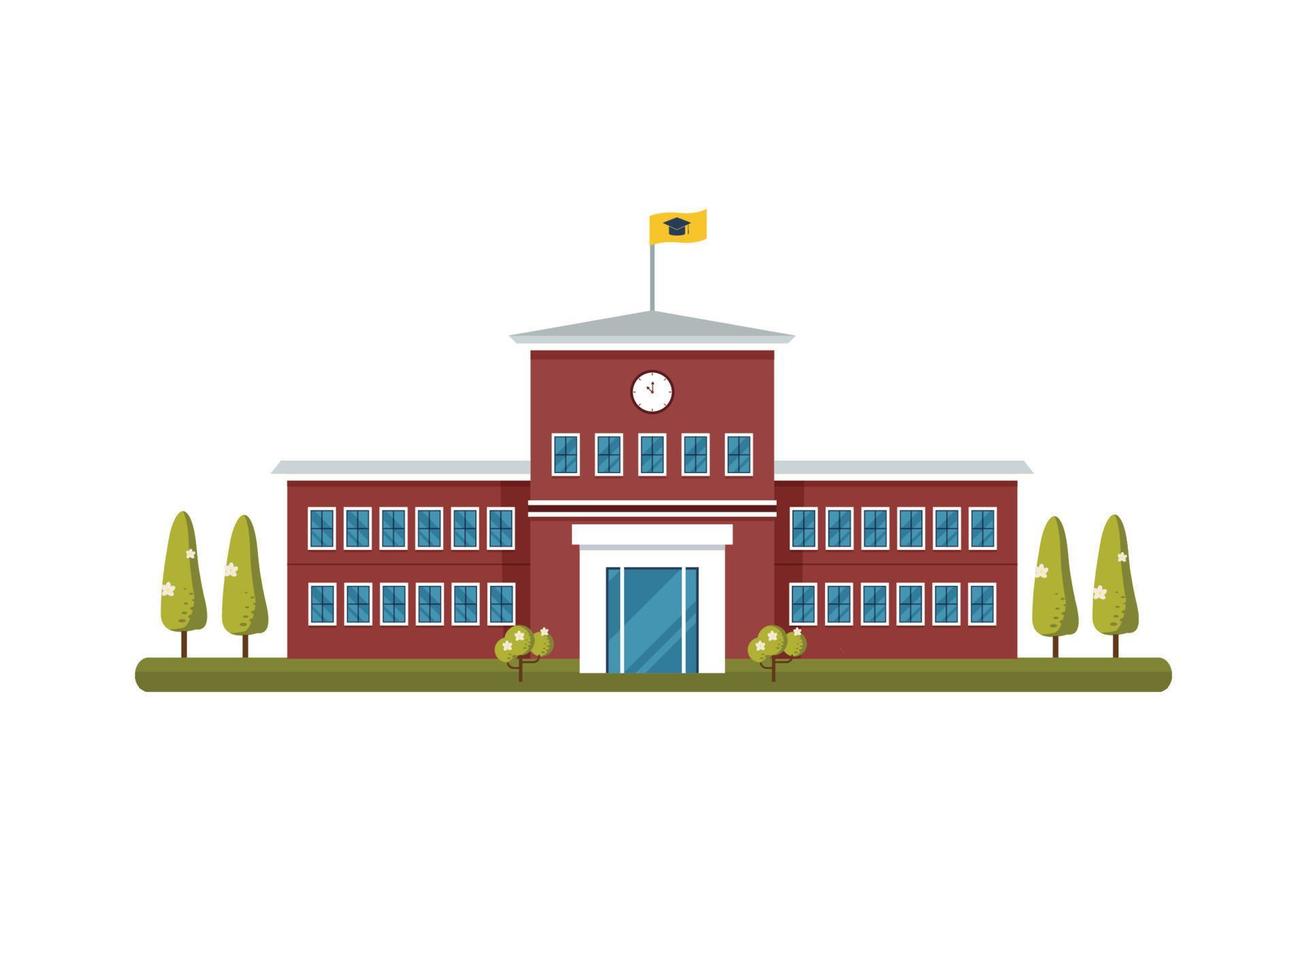 School building exterior vector illustration